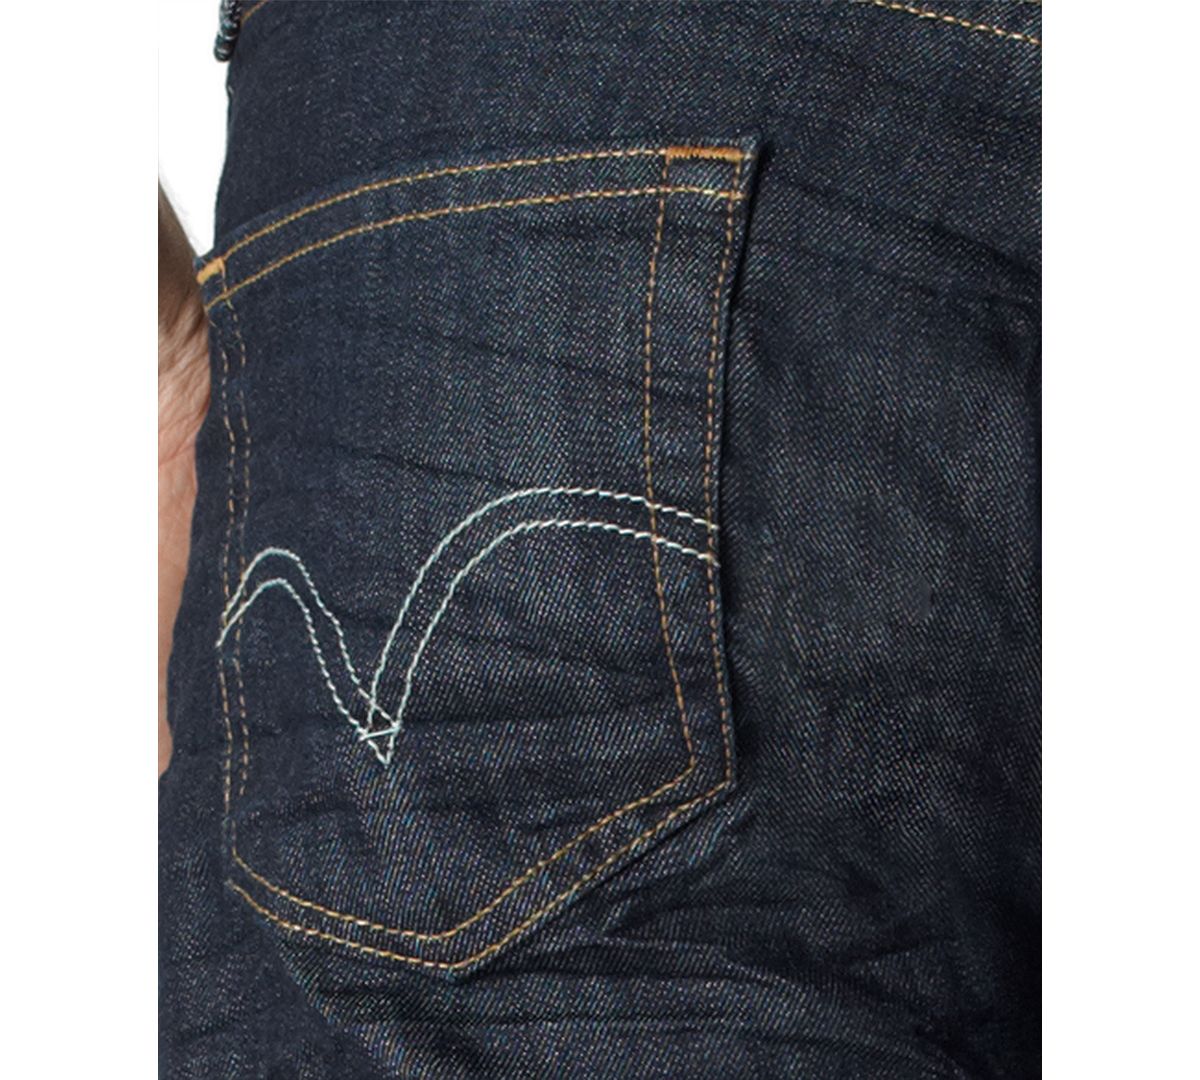 Levi's 501 Original Fit Jeans Dimensional Rigid - Waterless